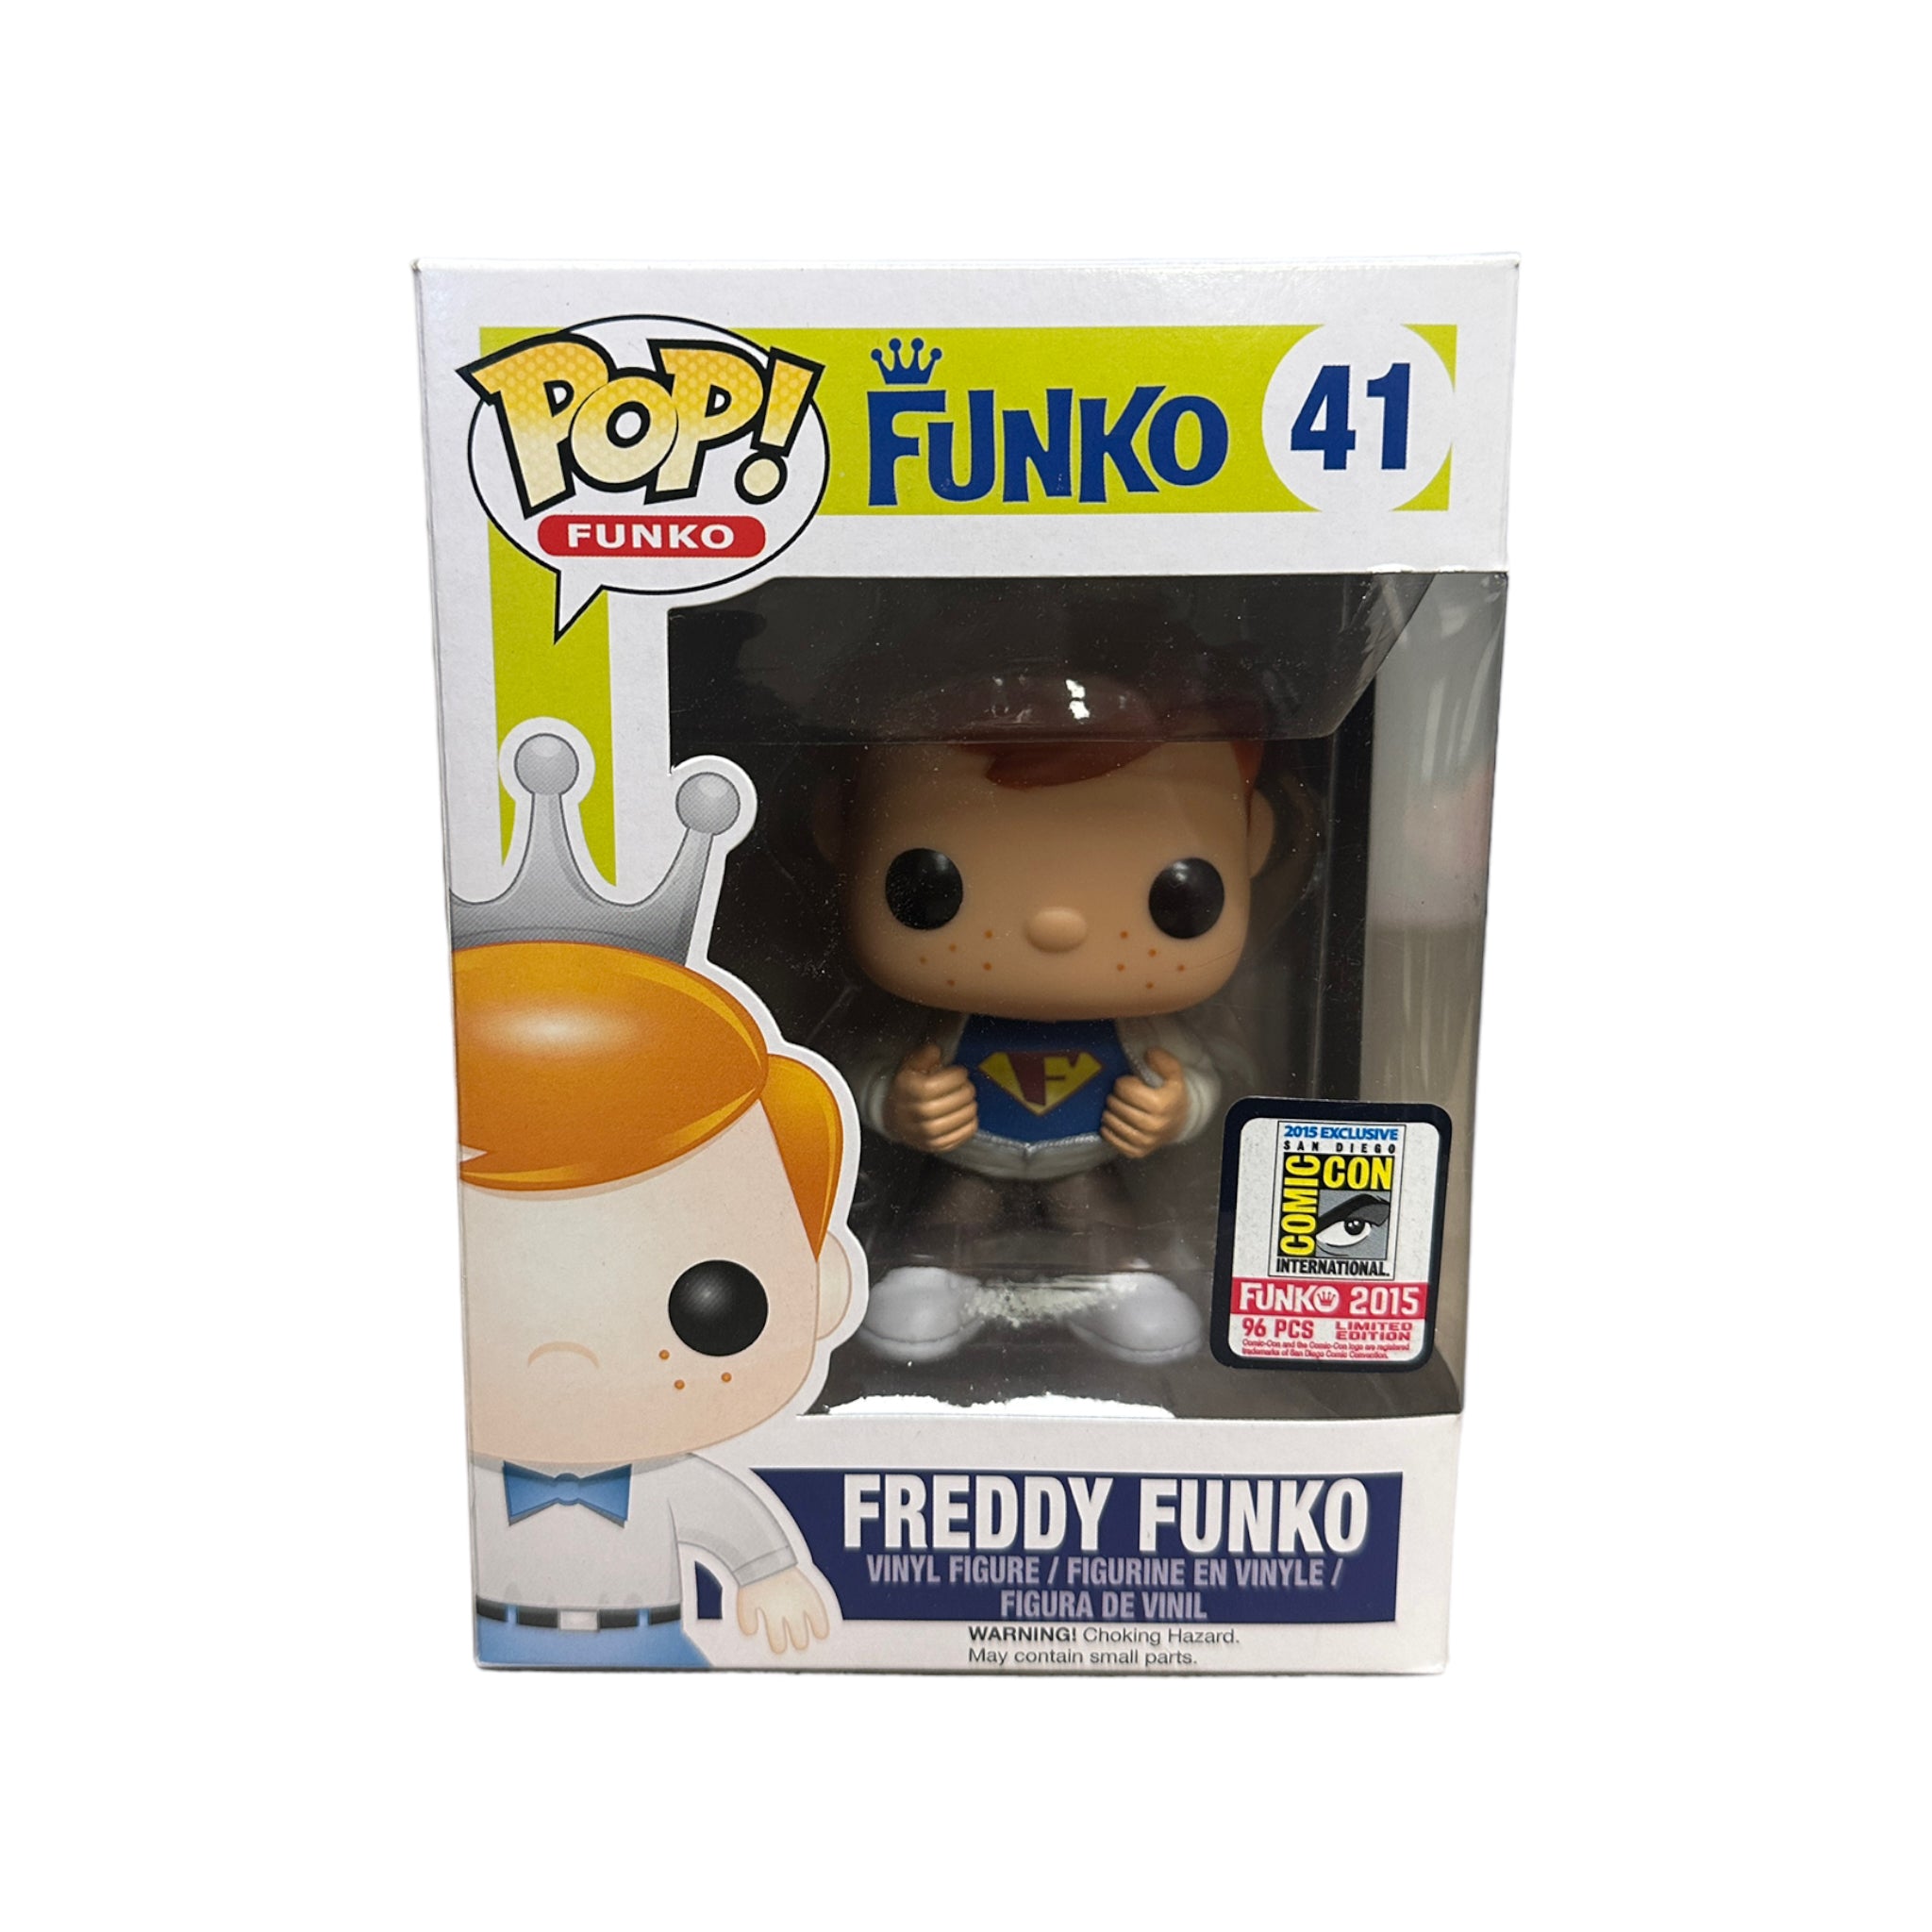 Freddy Funko as Stan Lee (Blue) #41 Funko Pop! - SDCC 2015 Exclusive LE96 Pcs - Condition 8.75/10